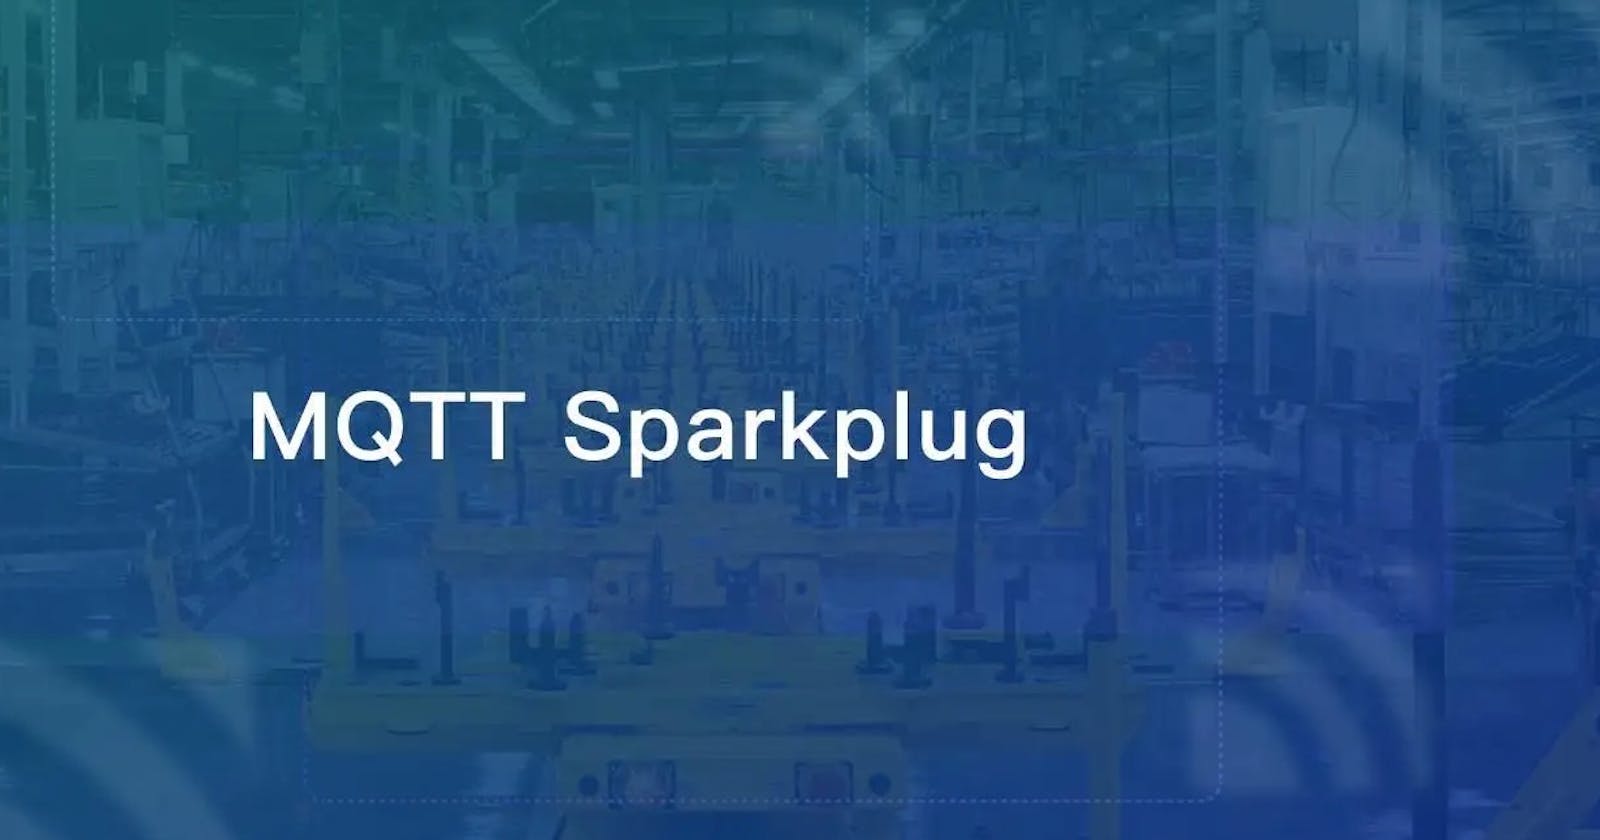 MQTT Sparkplug: Bridging IT and OT in Industry 4.0